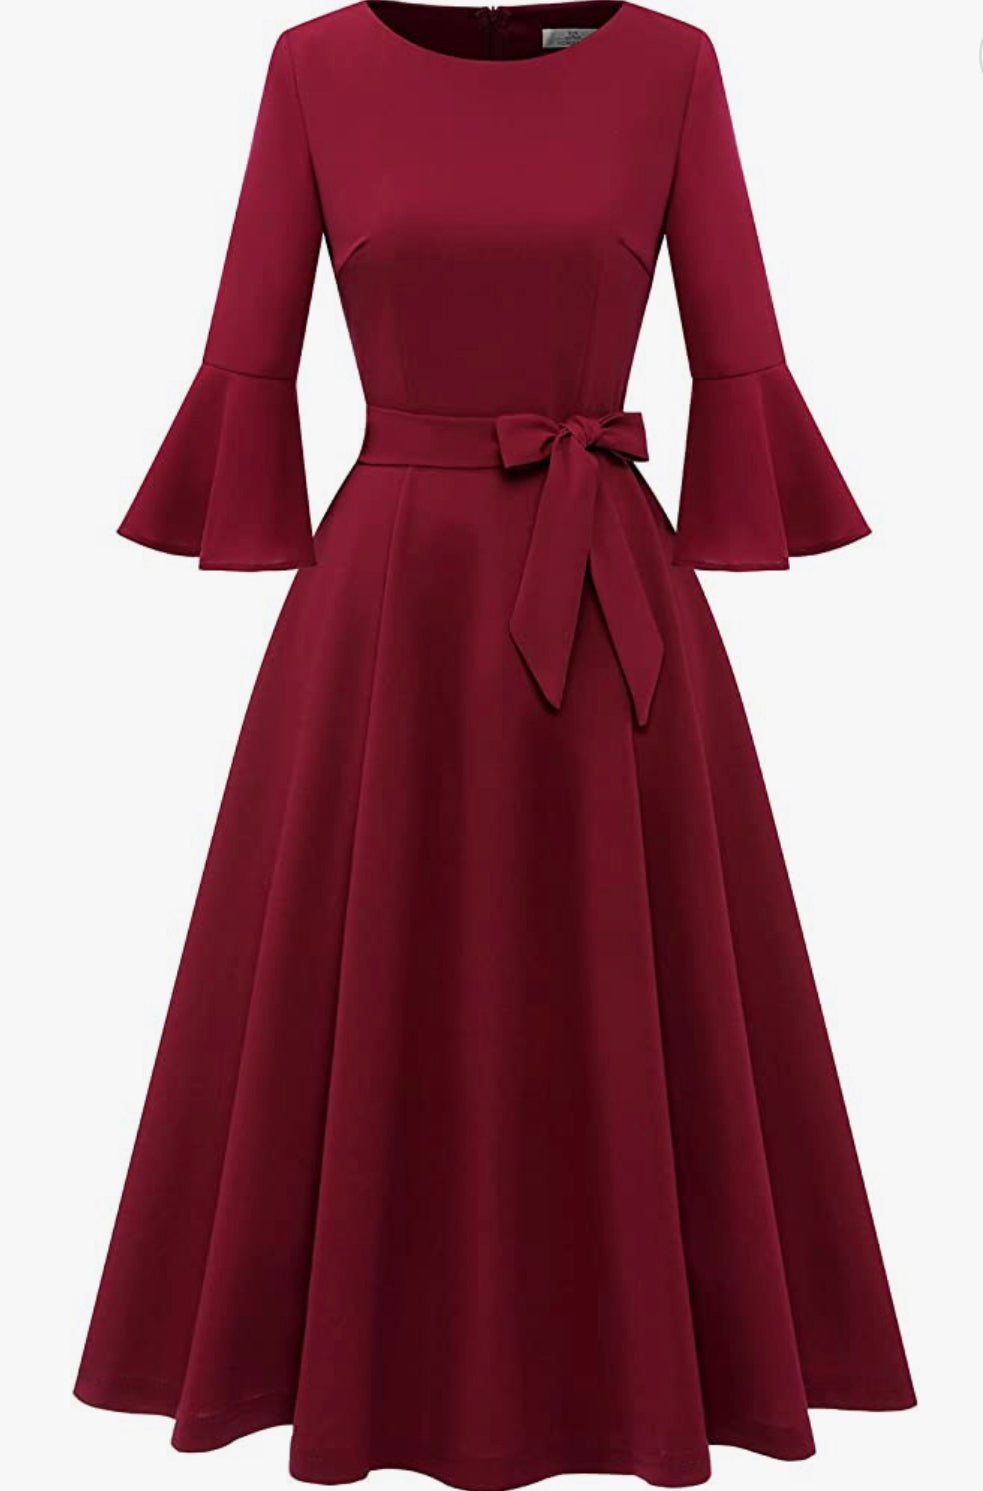 Elegant Bell Sleeve Cocktail Dress, Sizes Small - 3XLarge (Burgundy)